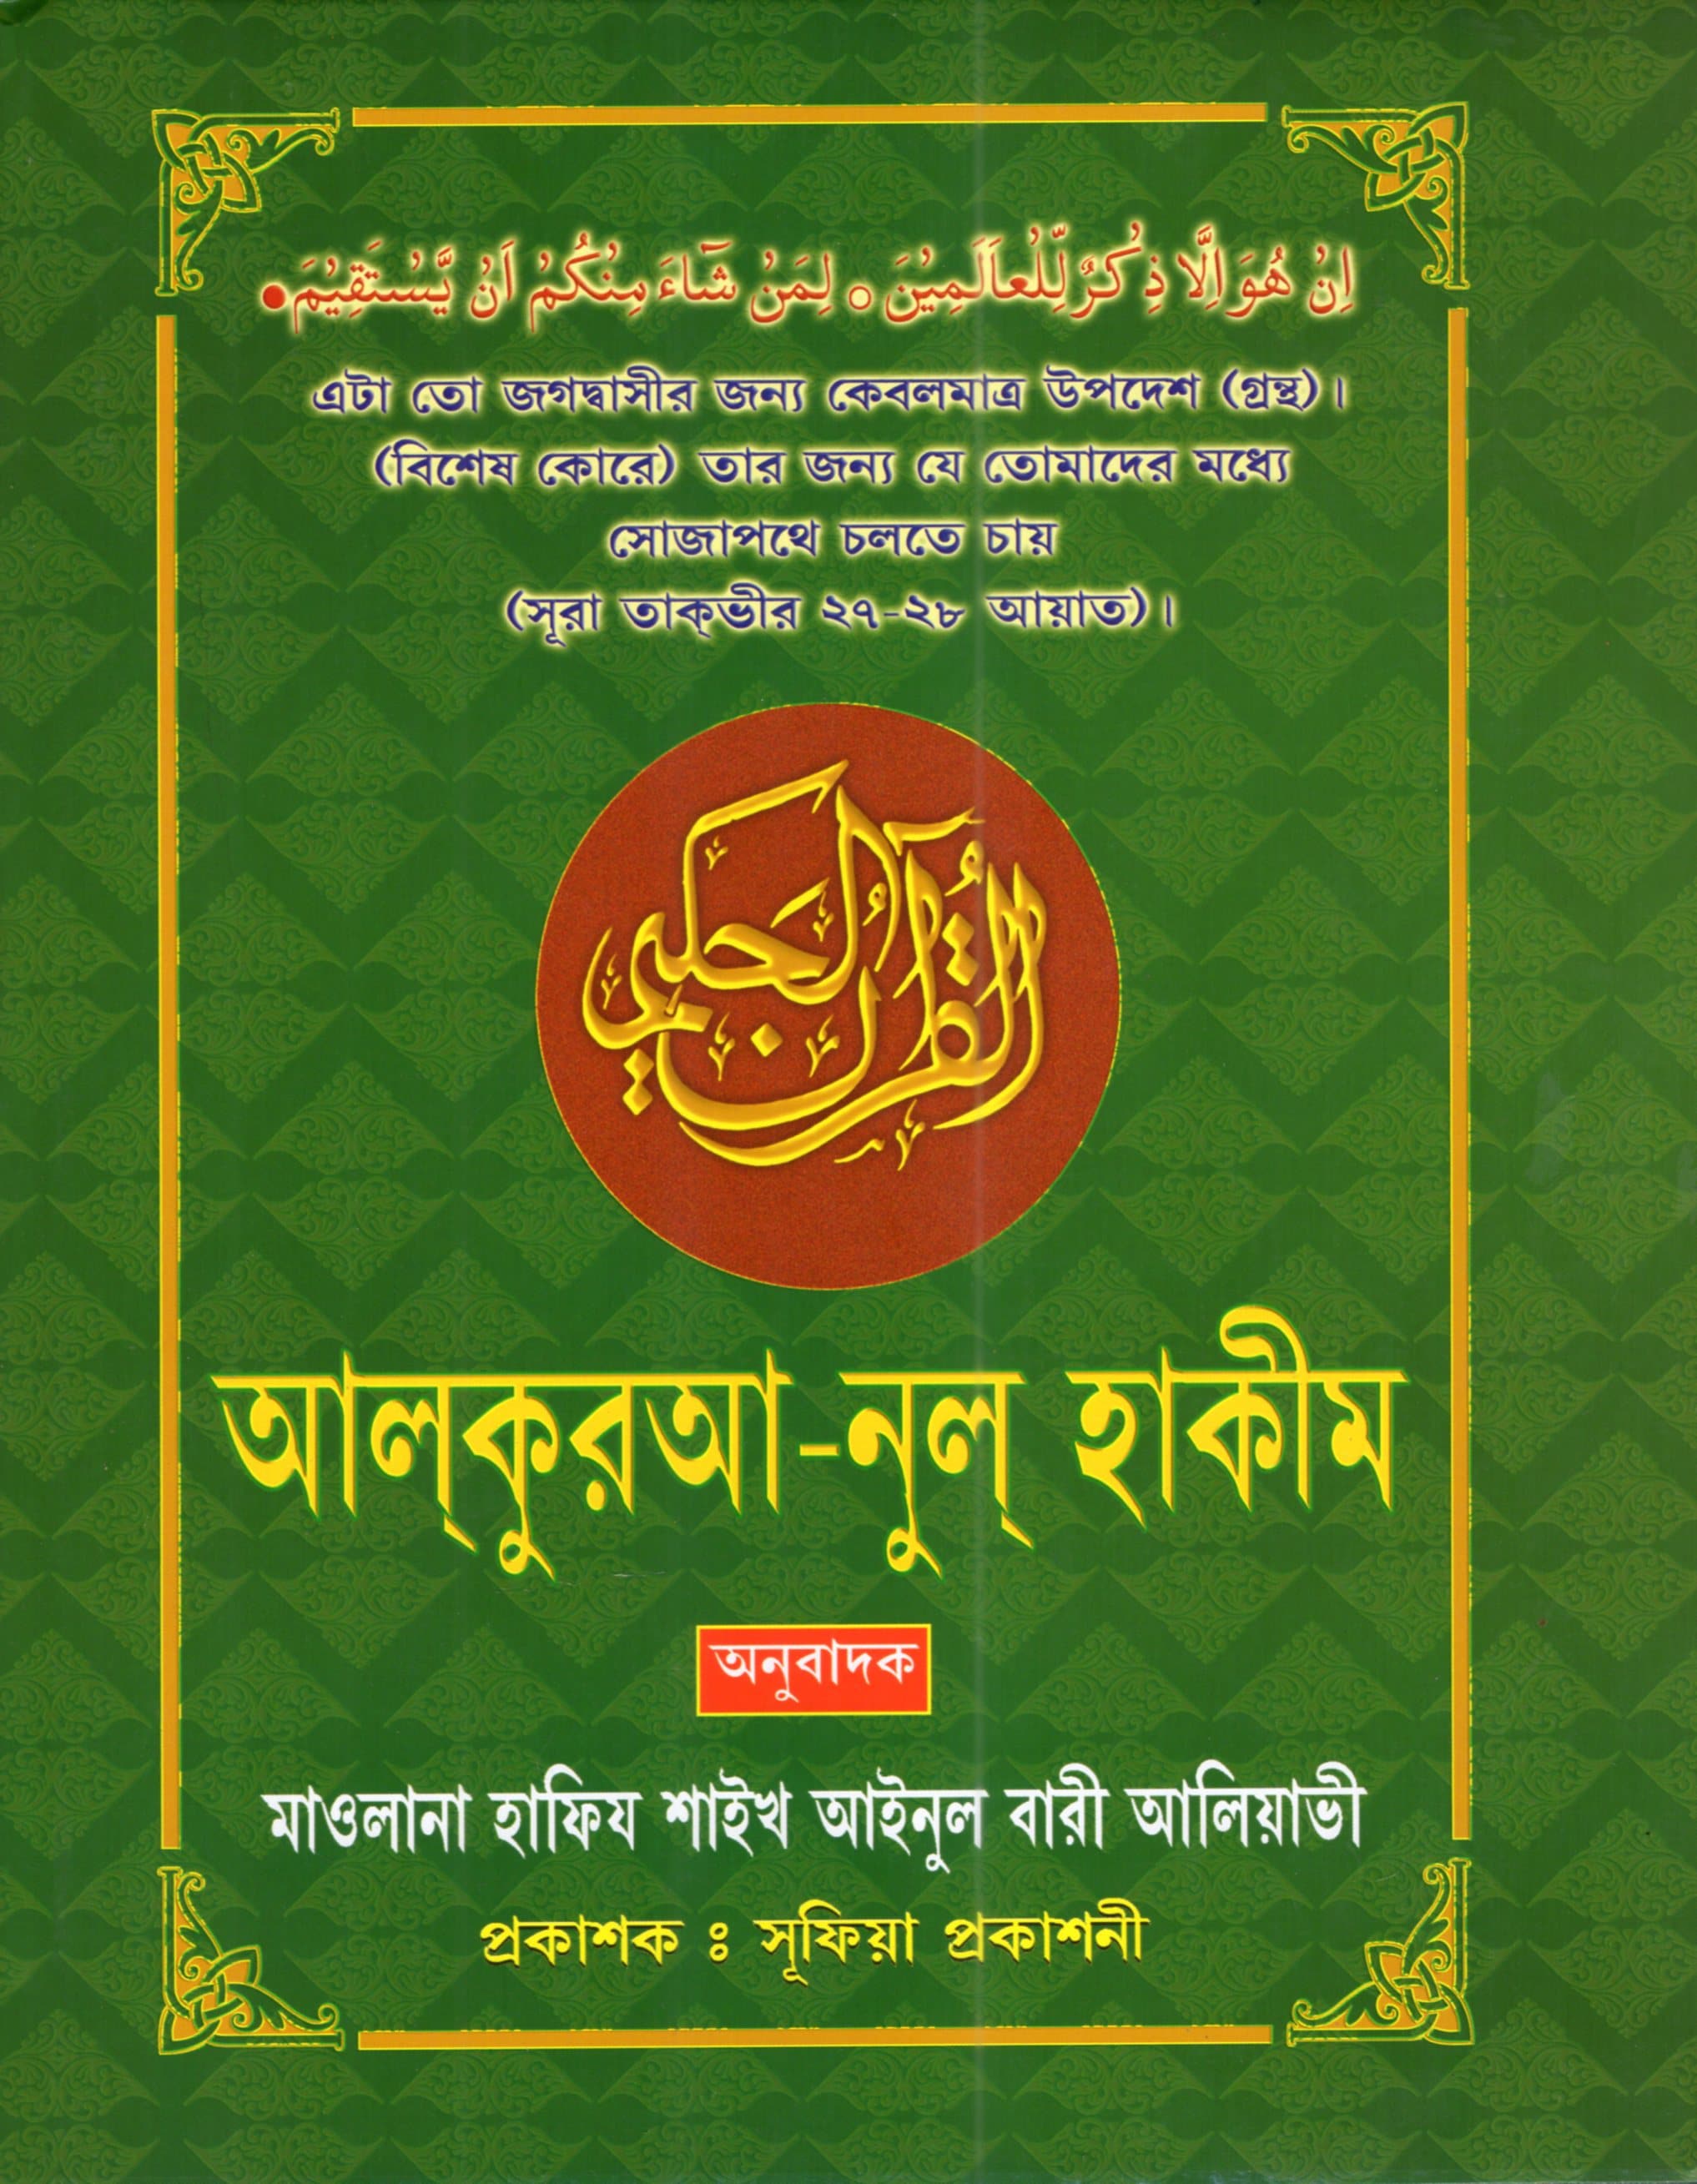 Bengali Translation 